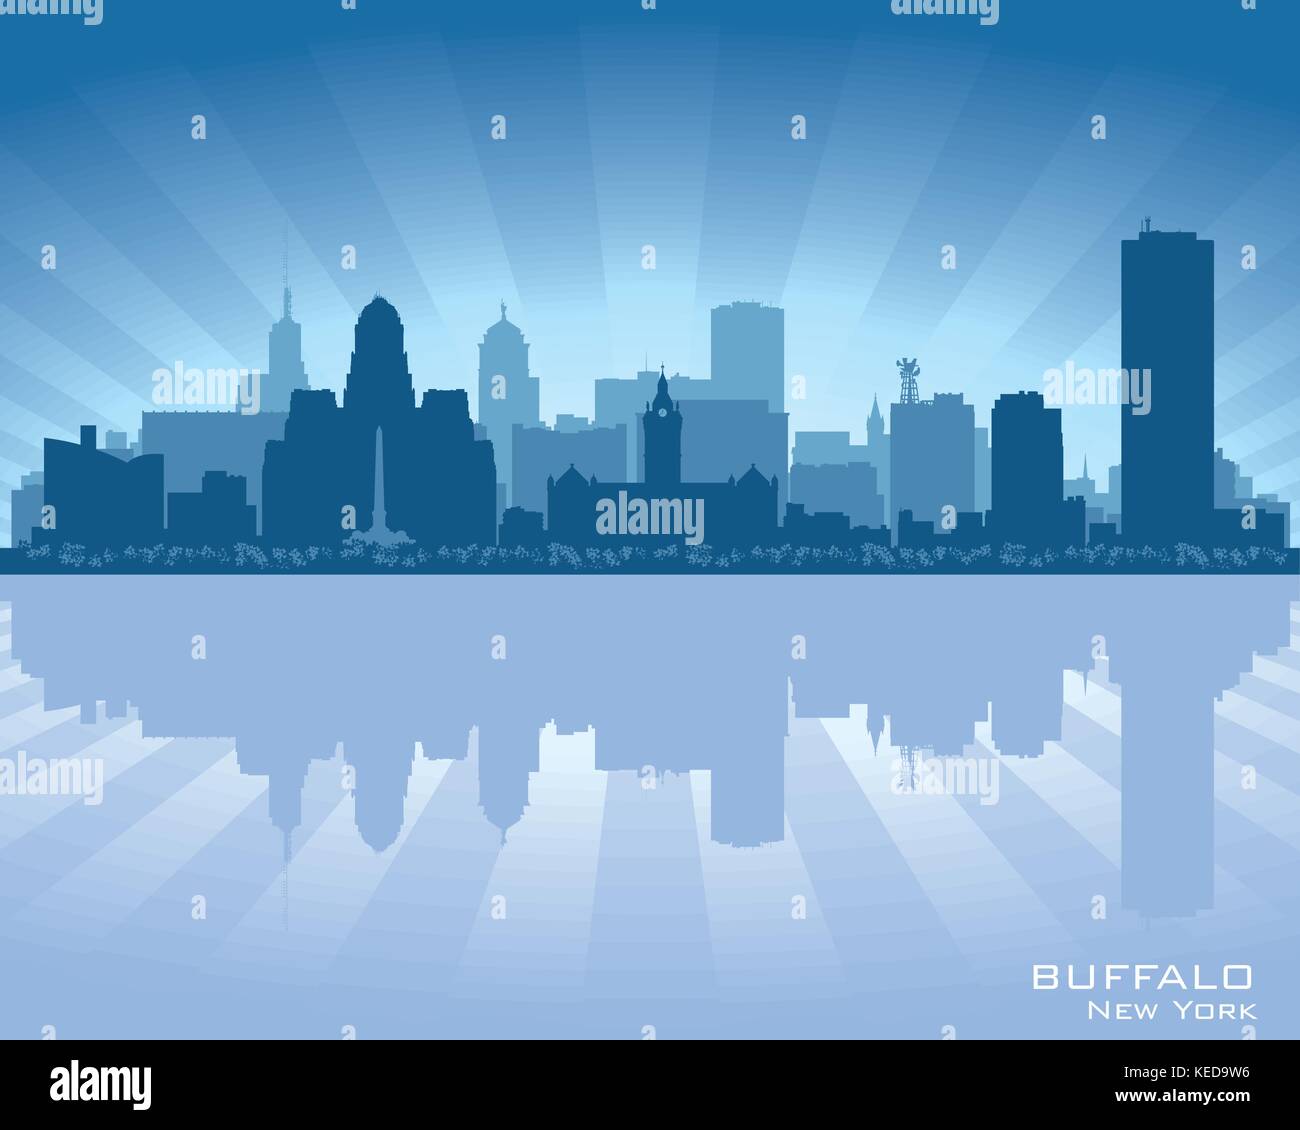 Buffalo, New York skyline silhouette ville Illustration de Vecteur